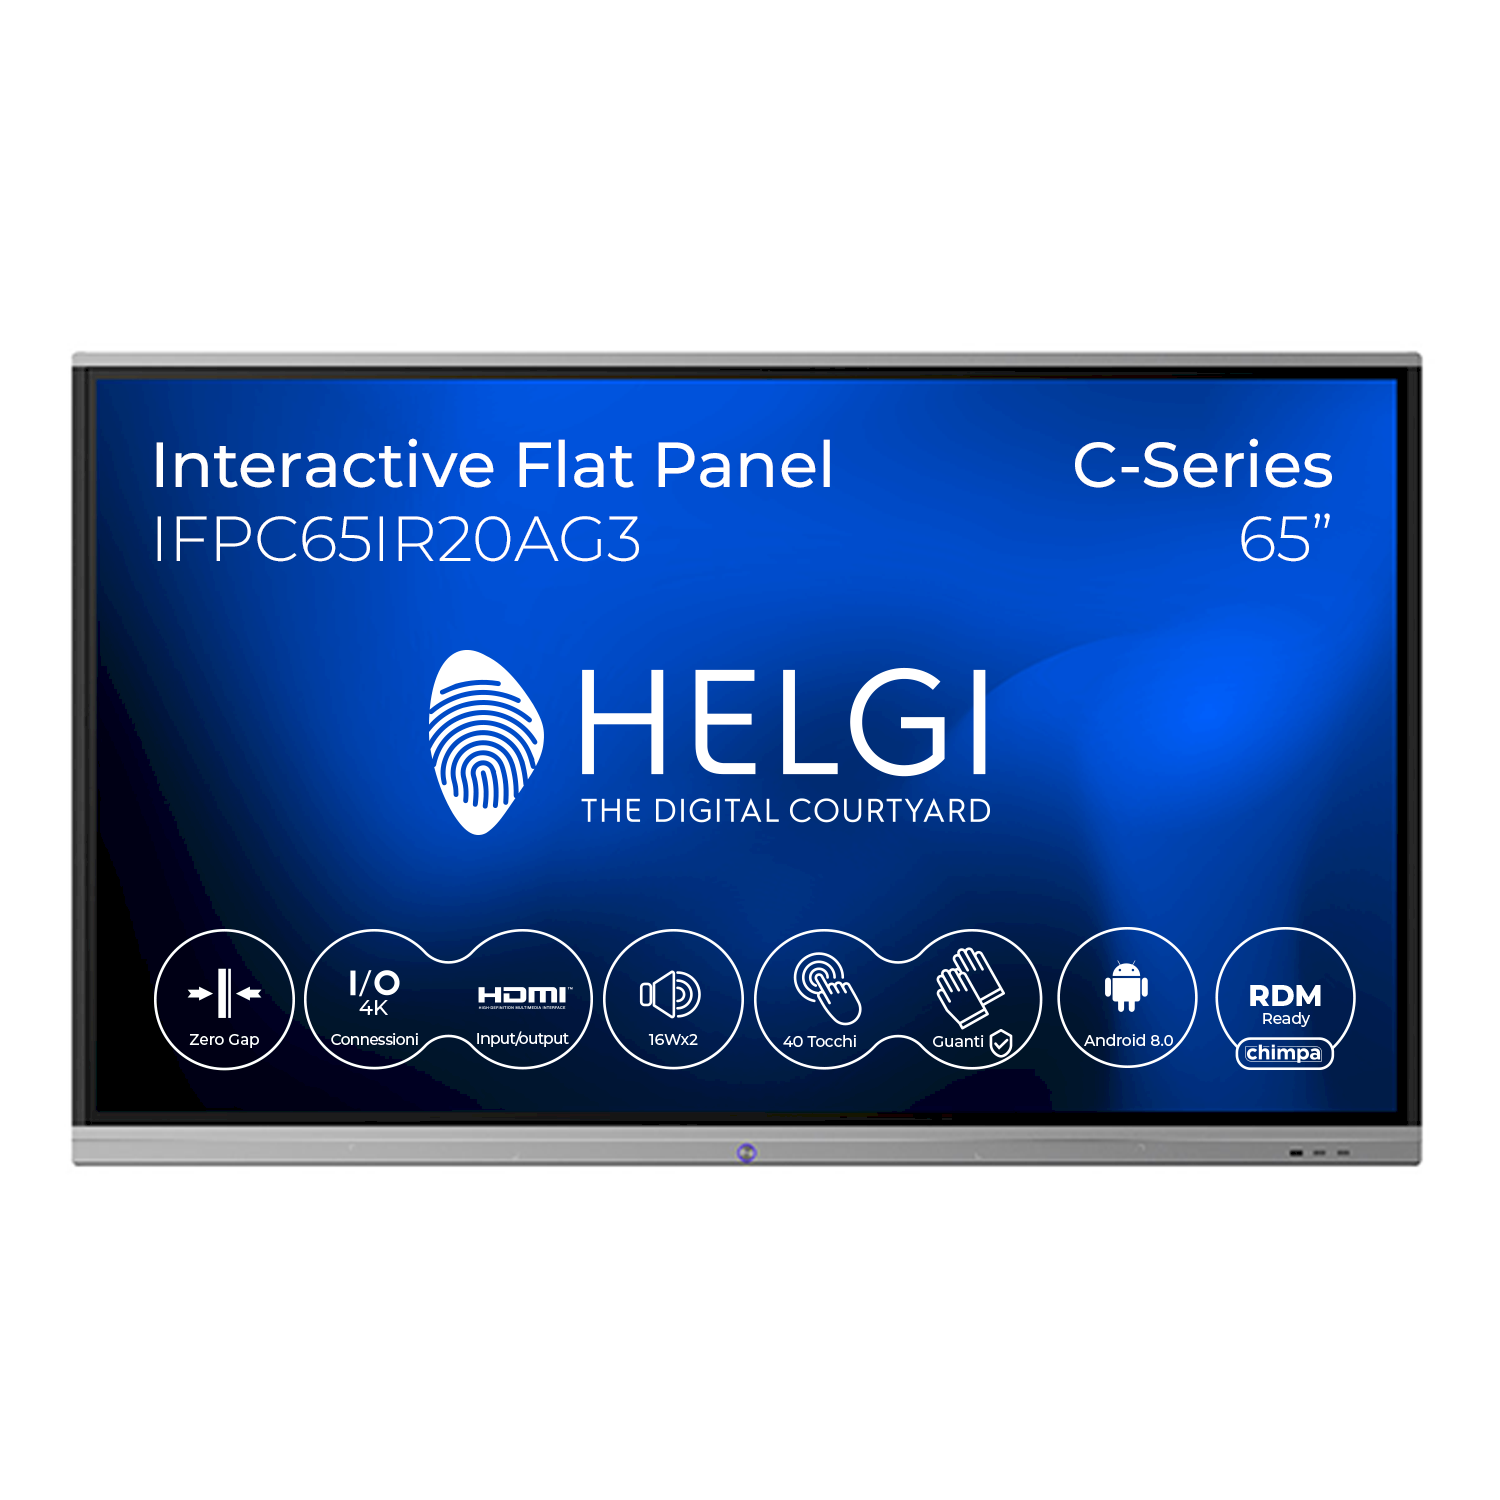 Interactive Flat Panel 65